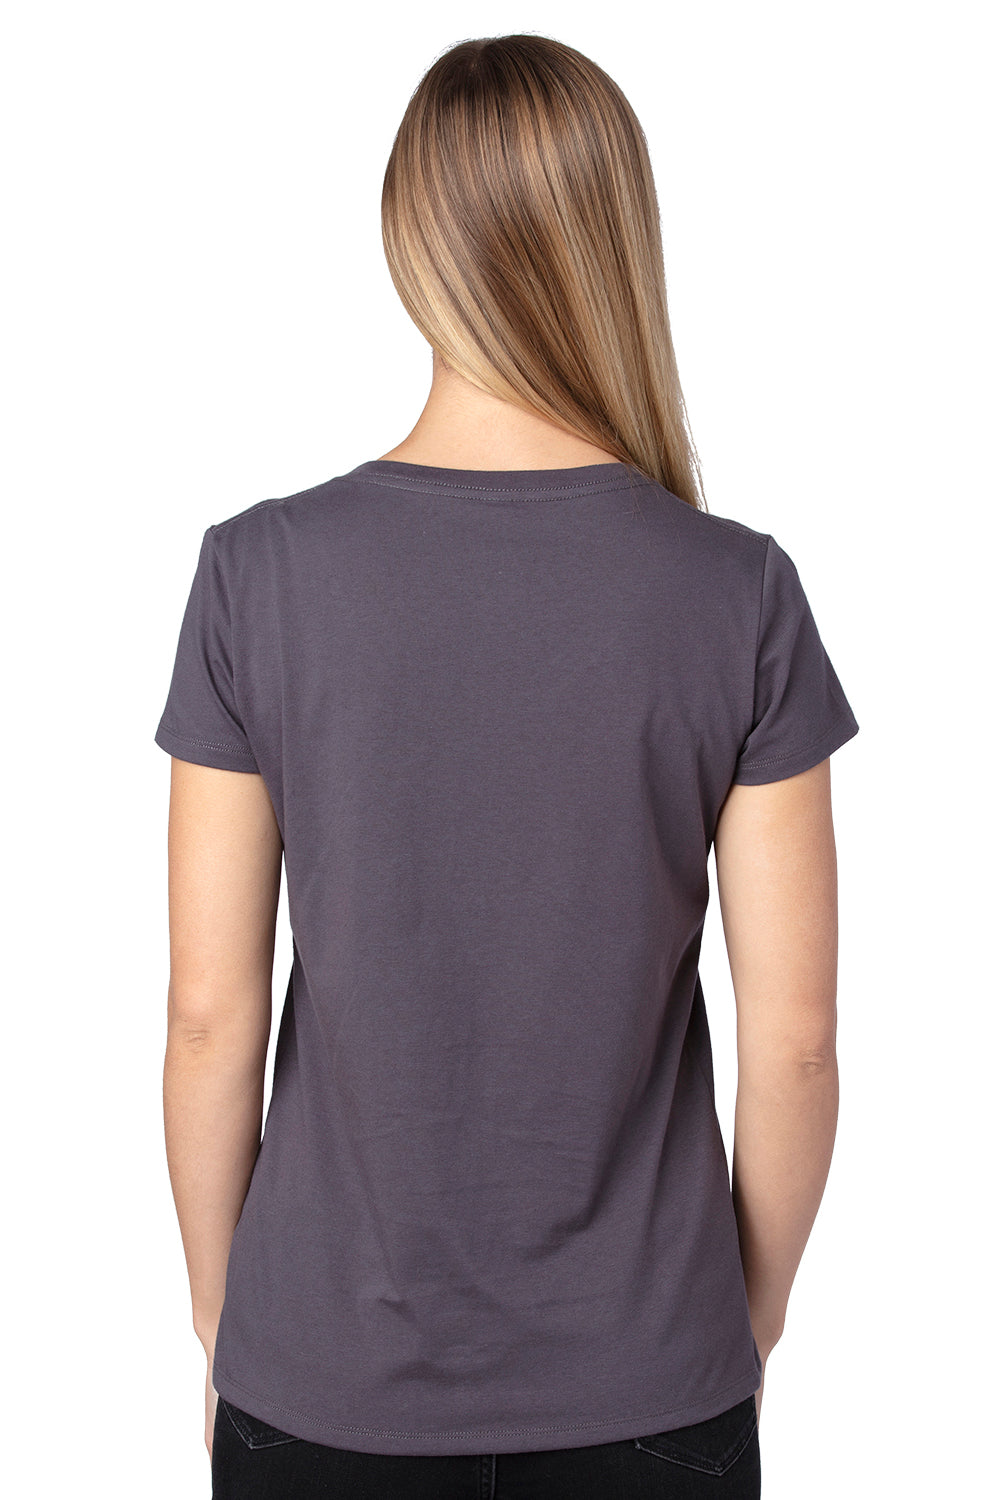 Threadfast Apparel 200RV Womens Ultimate Short Sleeve V-Neck T-Shirt Graphite Grey Back